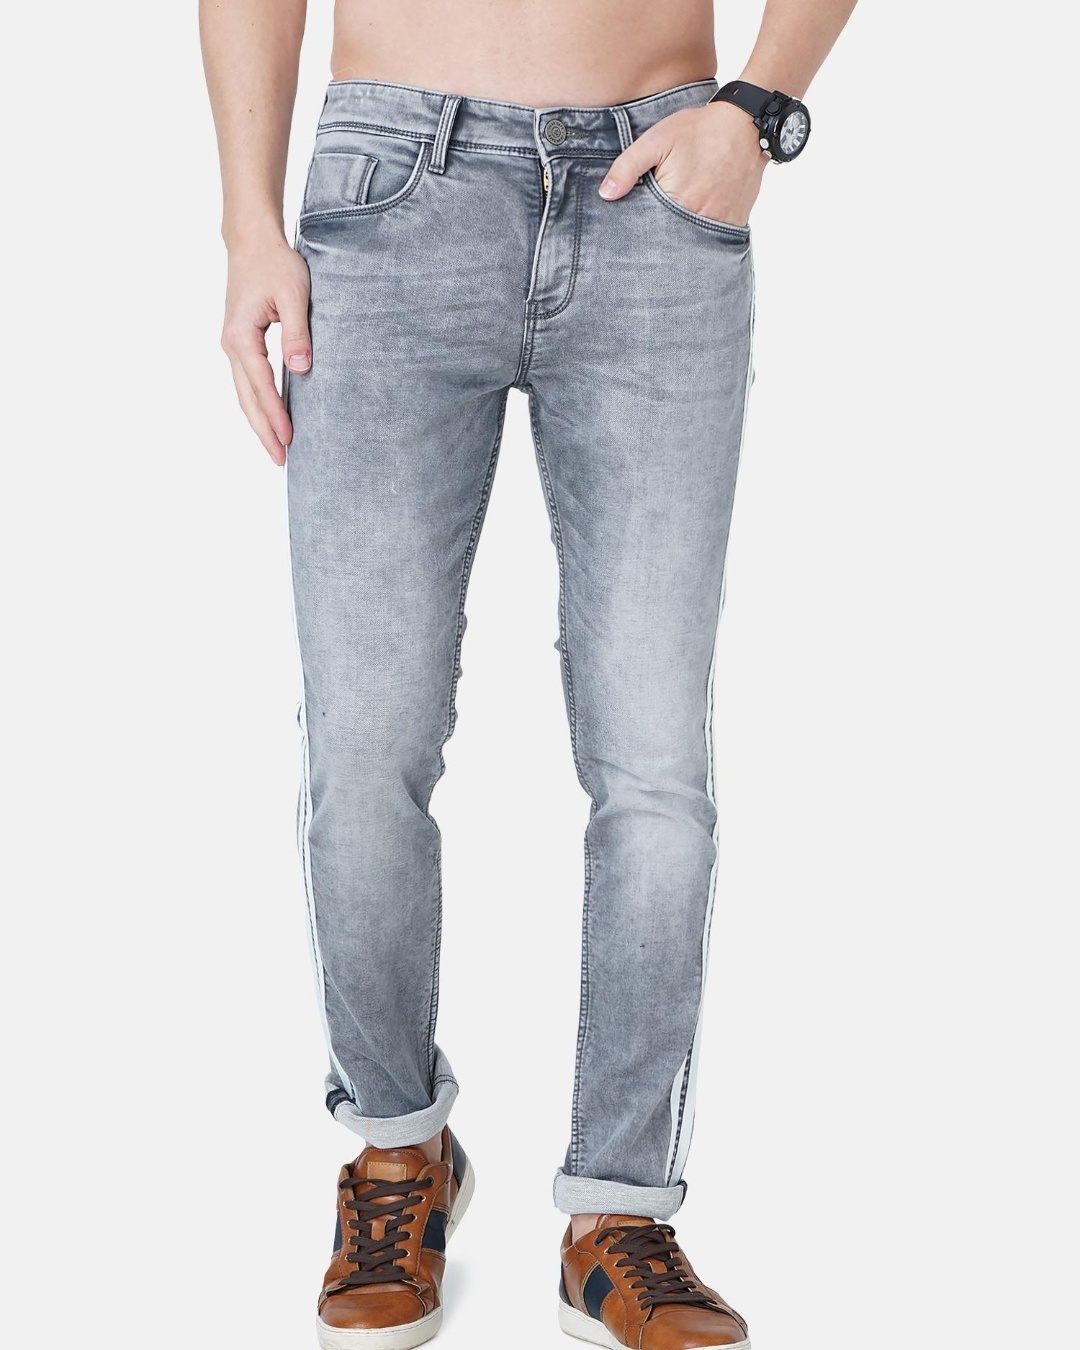 Buy Men S Grey Side Striped Slim Fit Jeans Online At Bewakoof